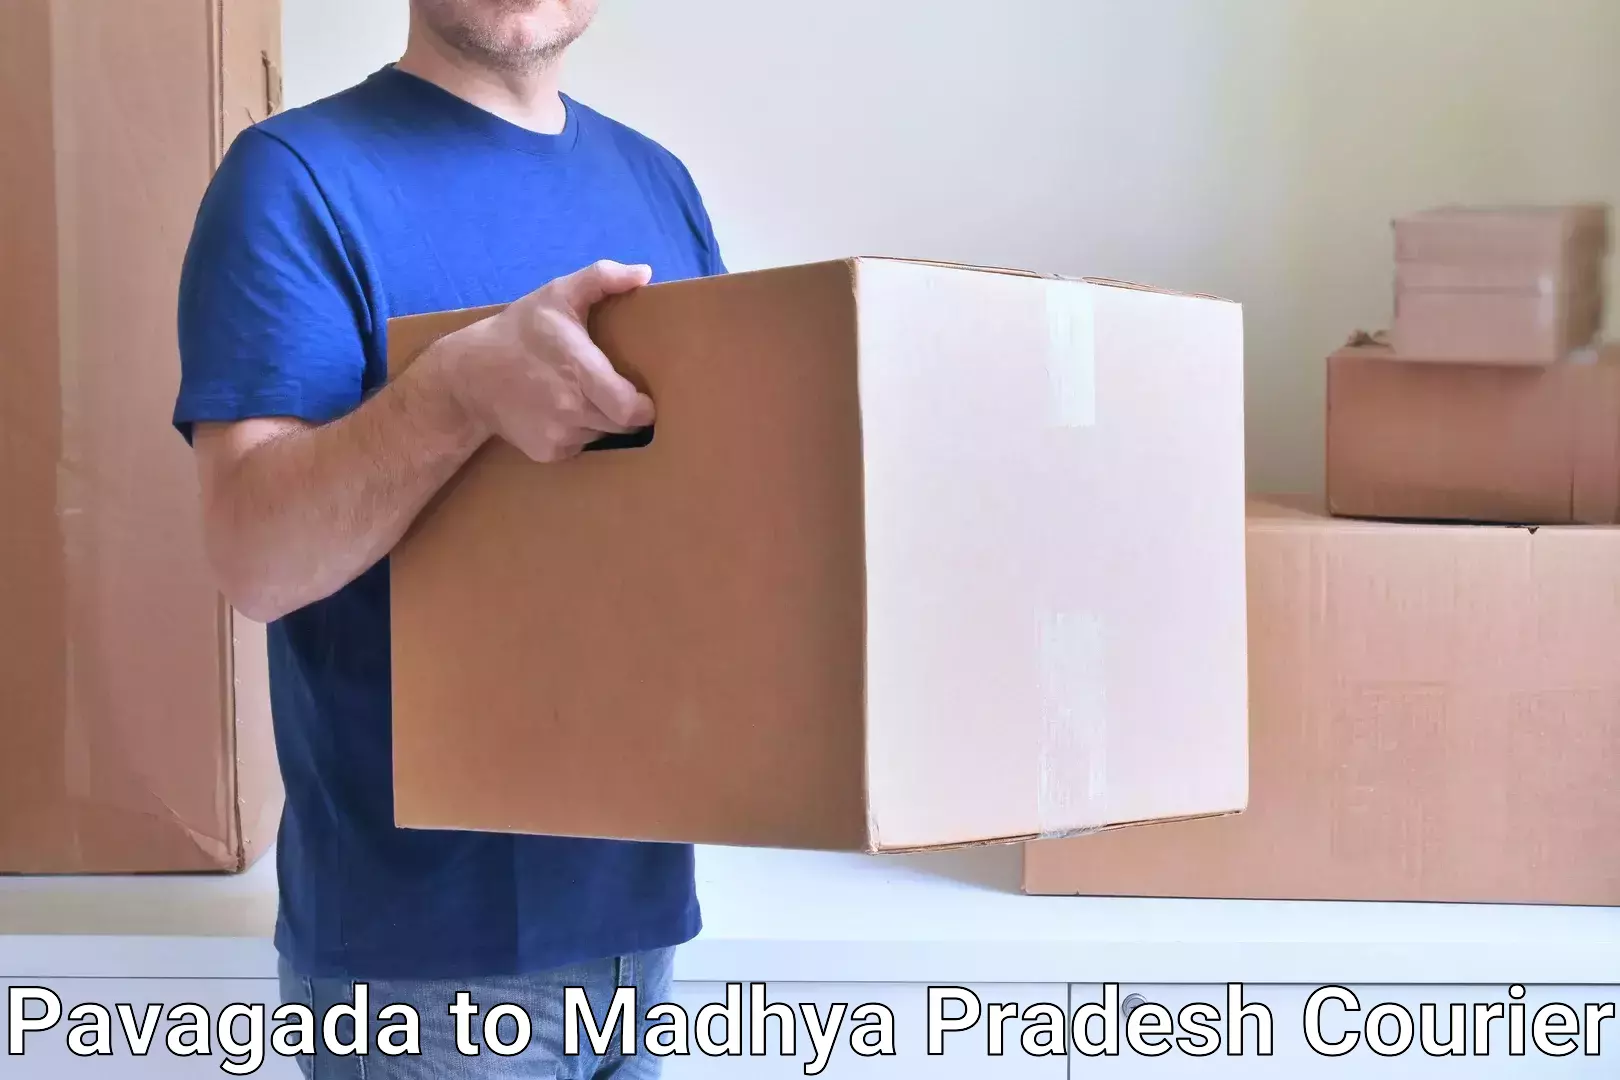 Efficient order fulfillment Pavagada to Madhya Pradesh